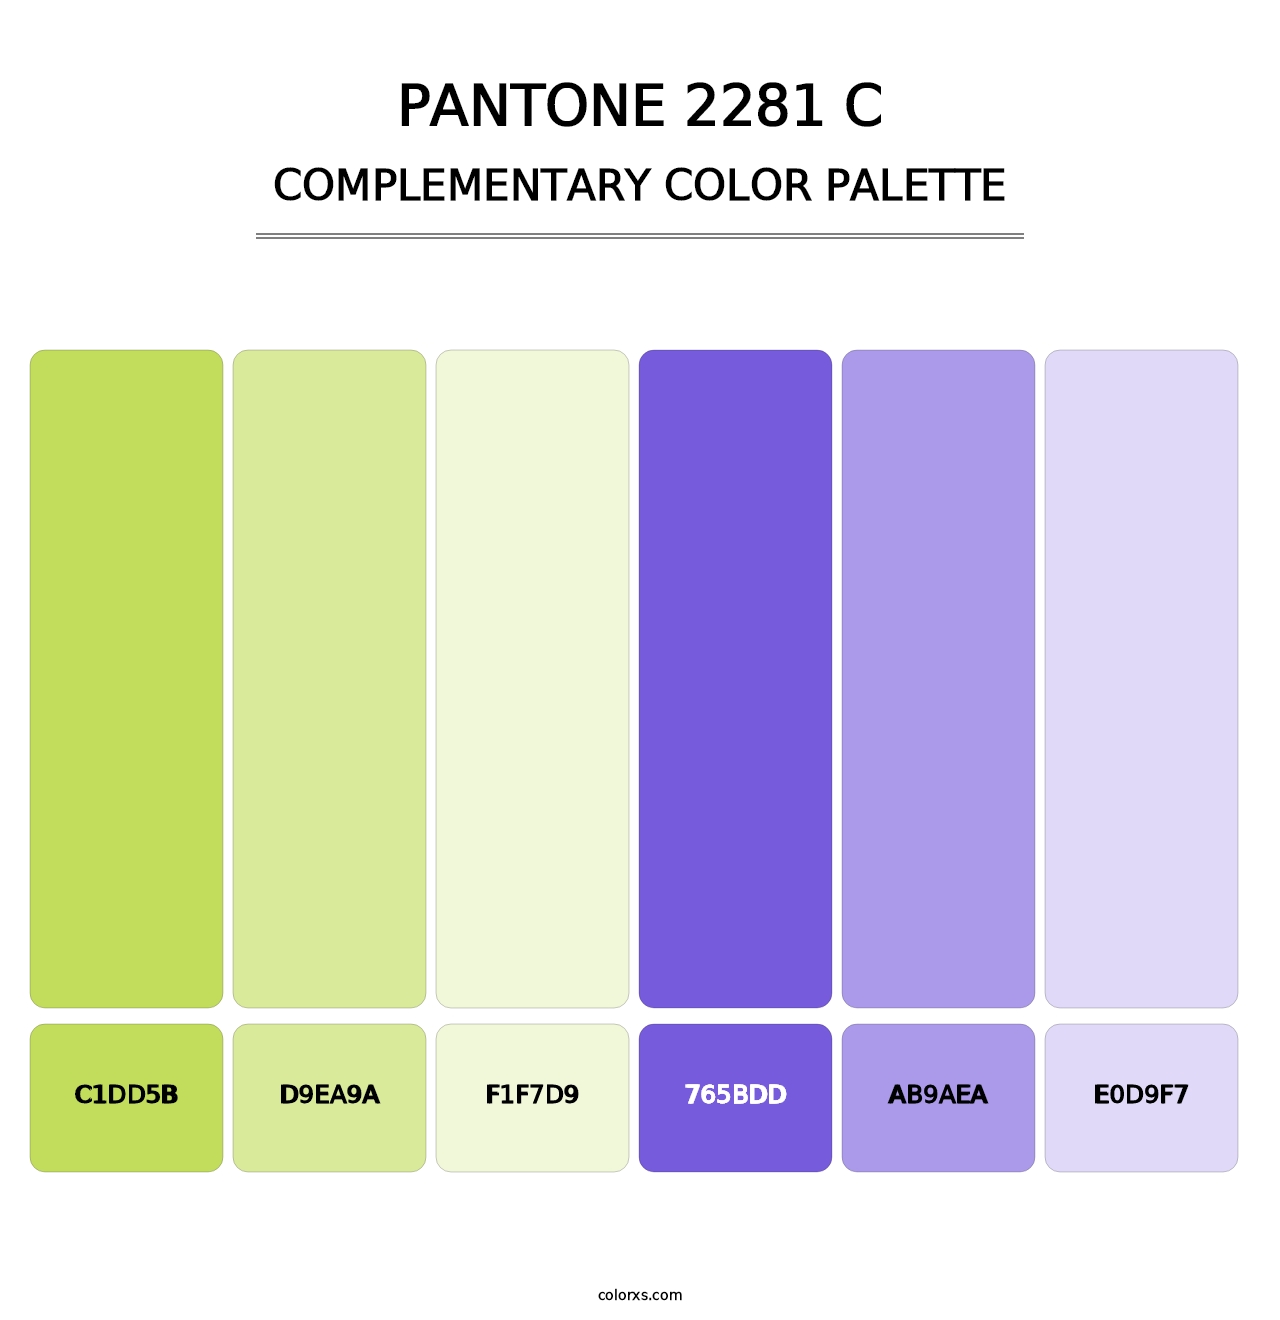 PANTONE 2281 C - Complementary Color Palette